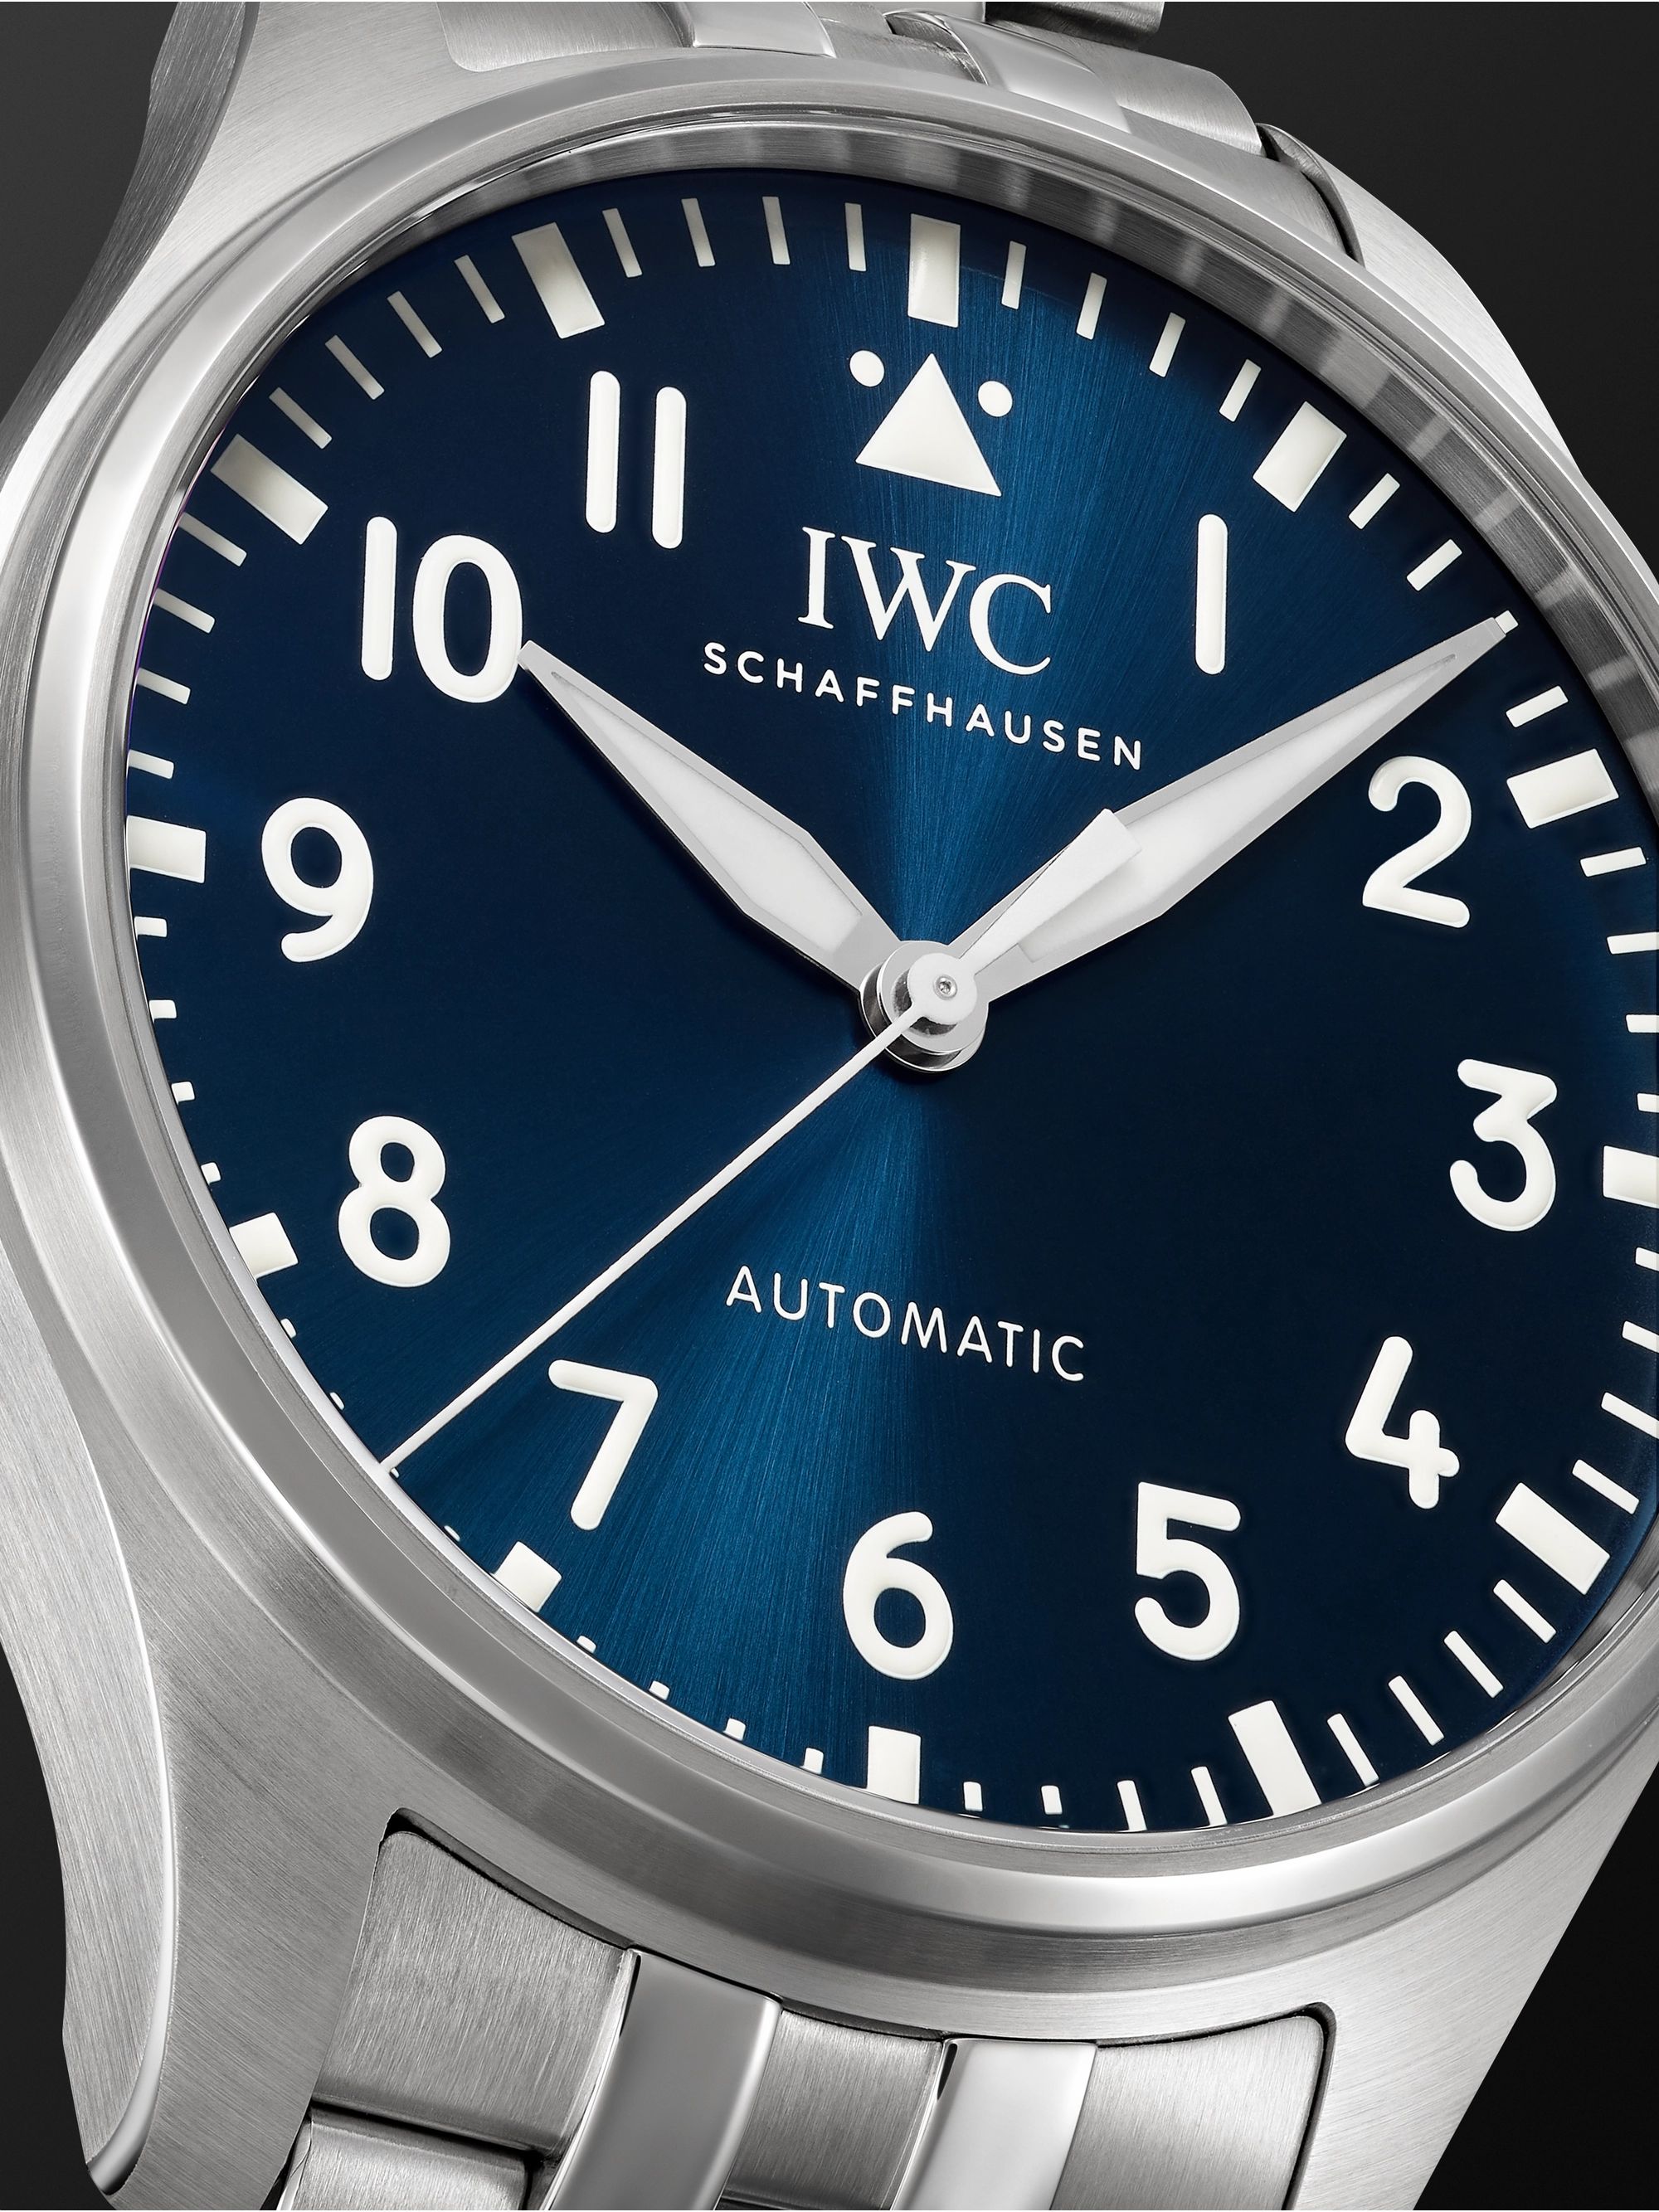 IWC SCHAFFHAUSEN Big Pilot's Automatic 43mm Stainless Steel Watch, Ref. No. IW329304